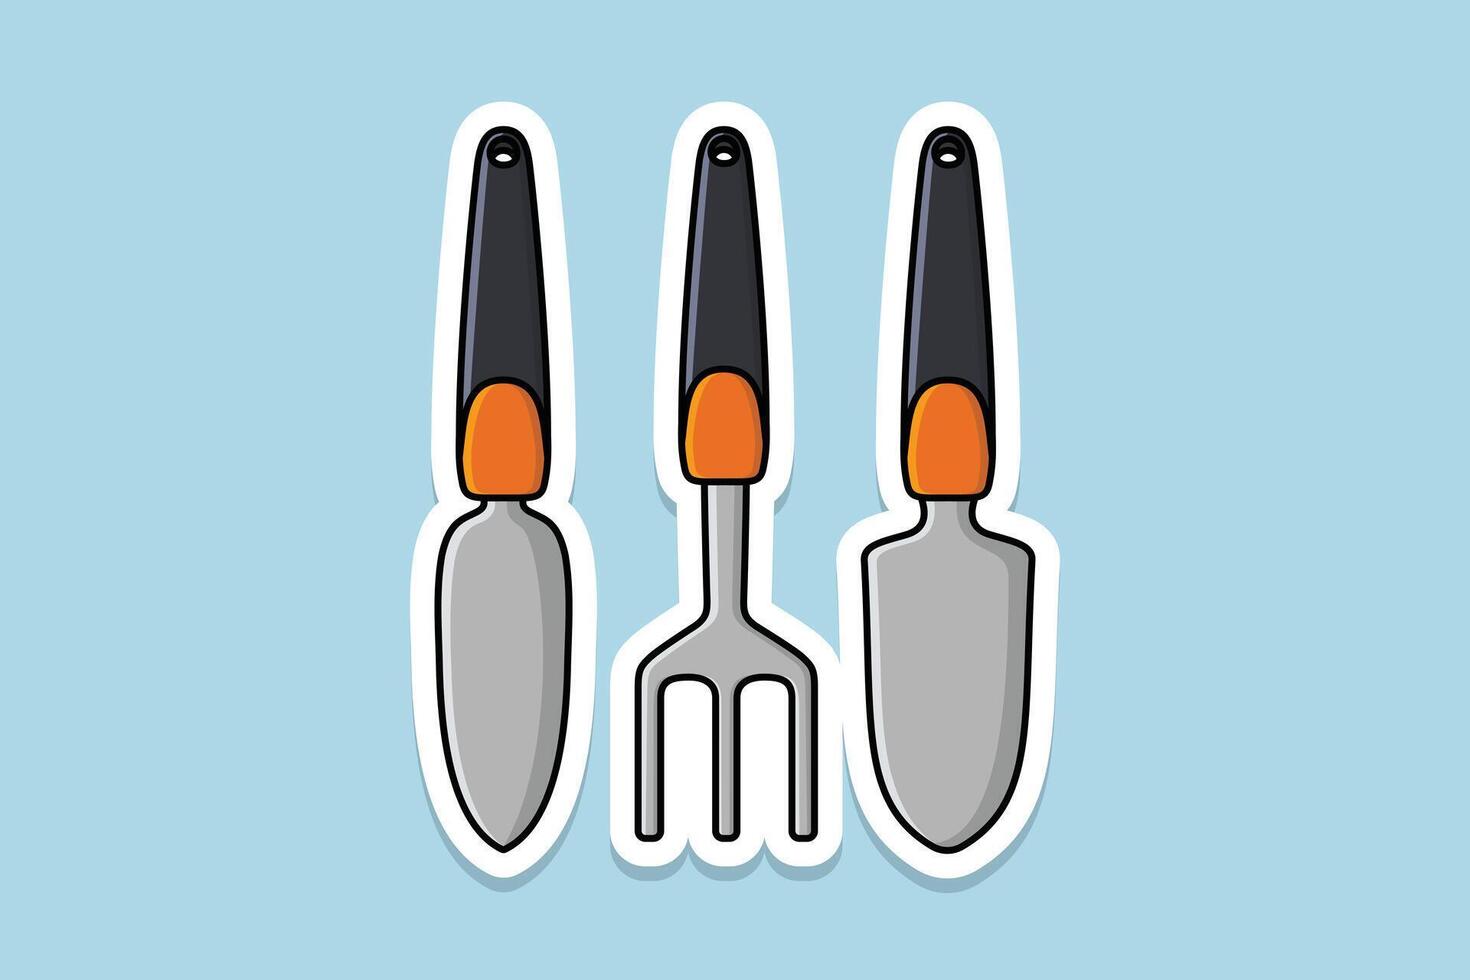 Spoon, Knife and Fork Sticker vector illustration. Home interior equipment icon concept. Restaurant kitchen set sticker logo design.